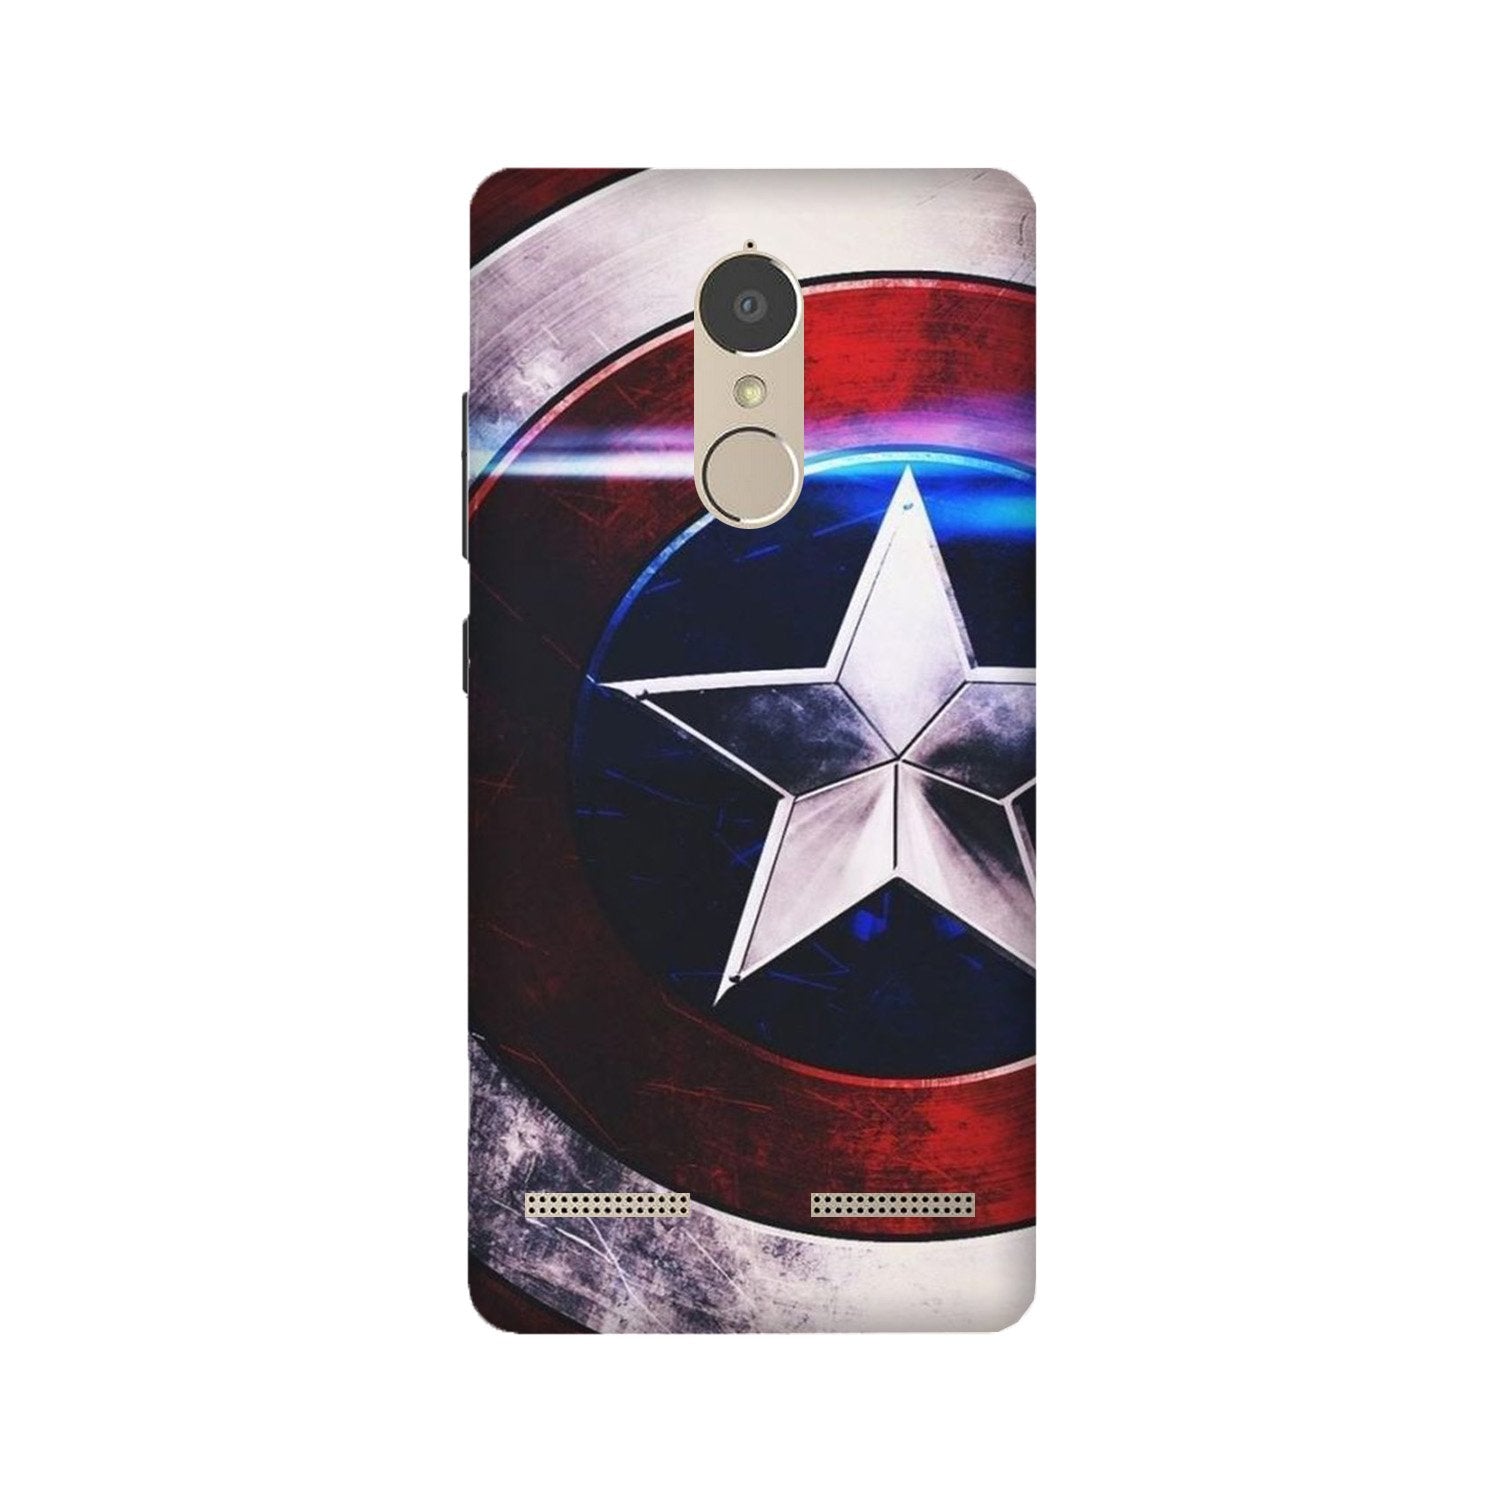 Captain America Shield Case for Lenovo K6 / K6 Power (Design No. 250)